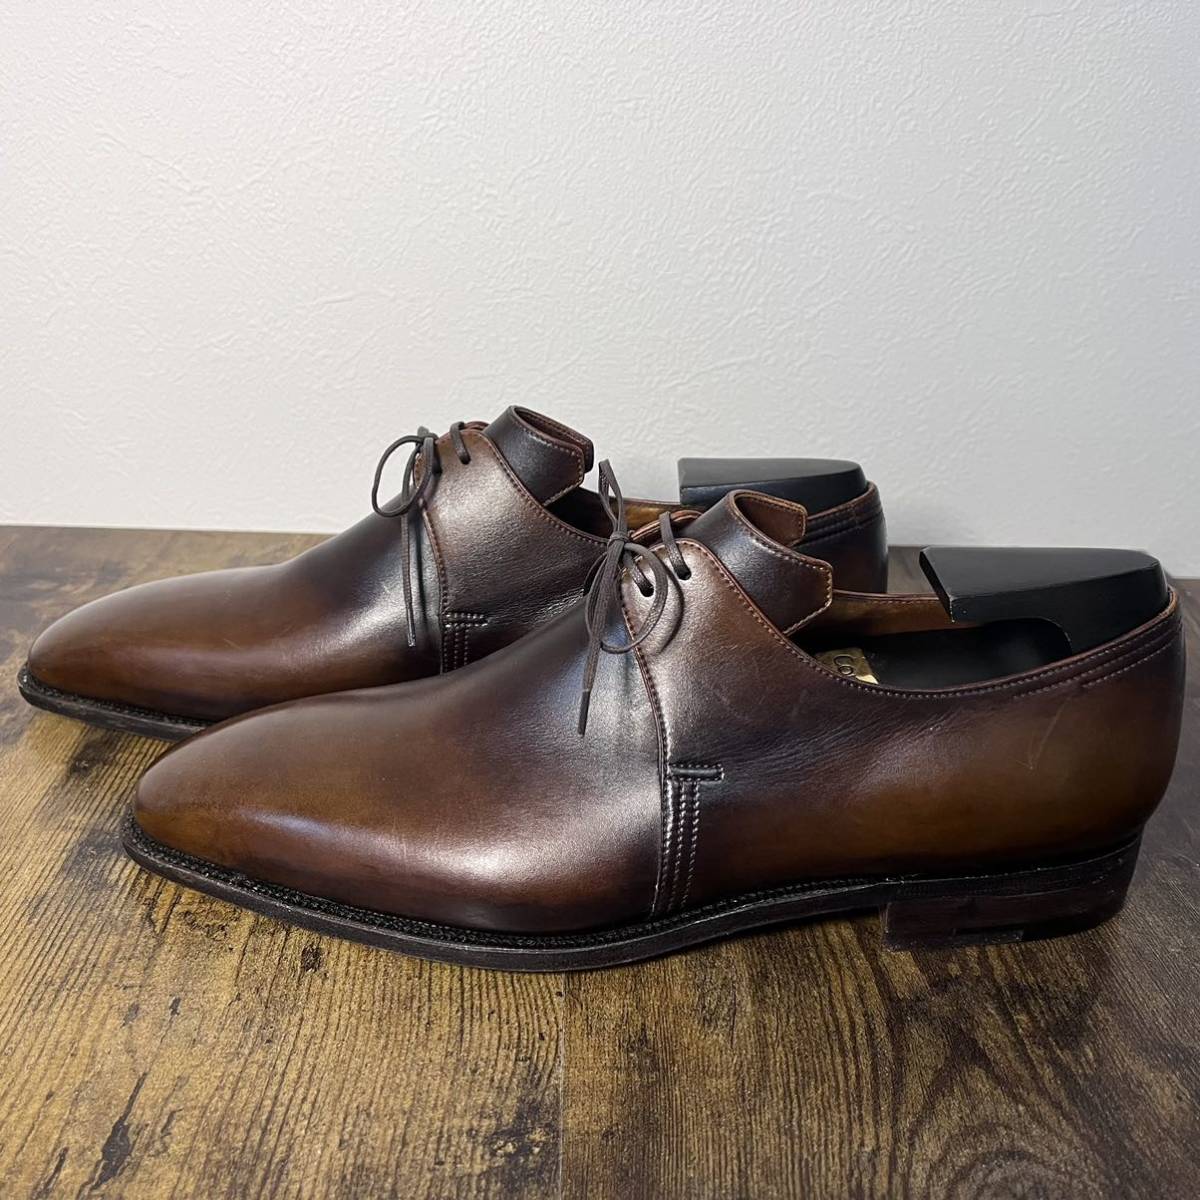 Corthay Arca コルテ アルカ9 靴 ブーツ Shoes Boots ①ブラウン Brown